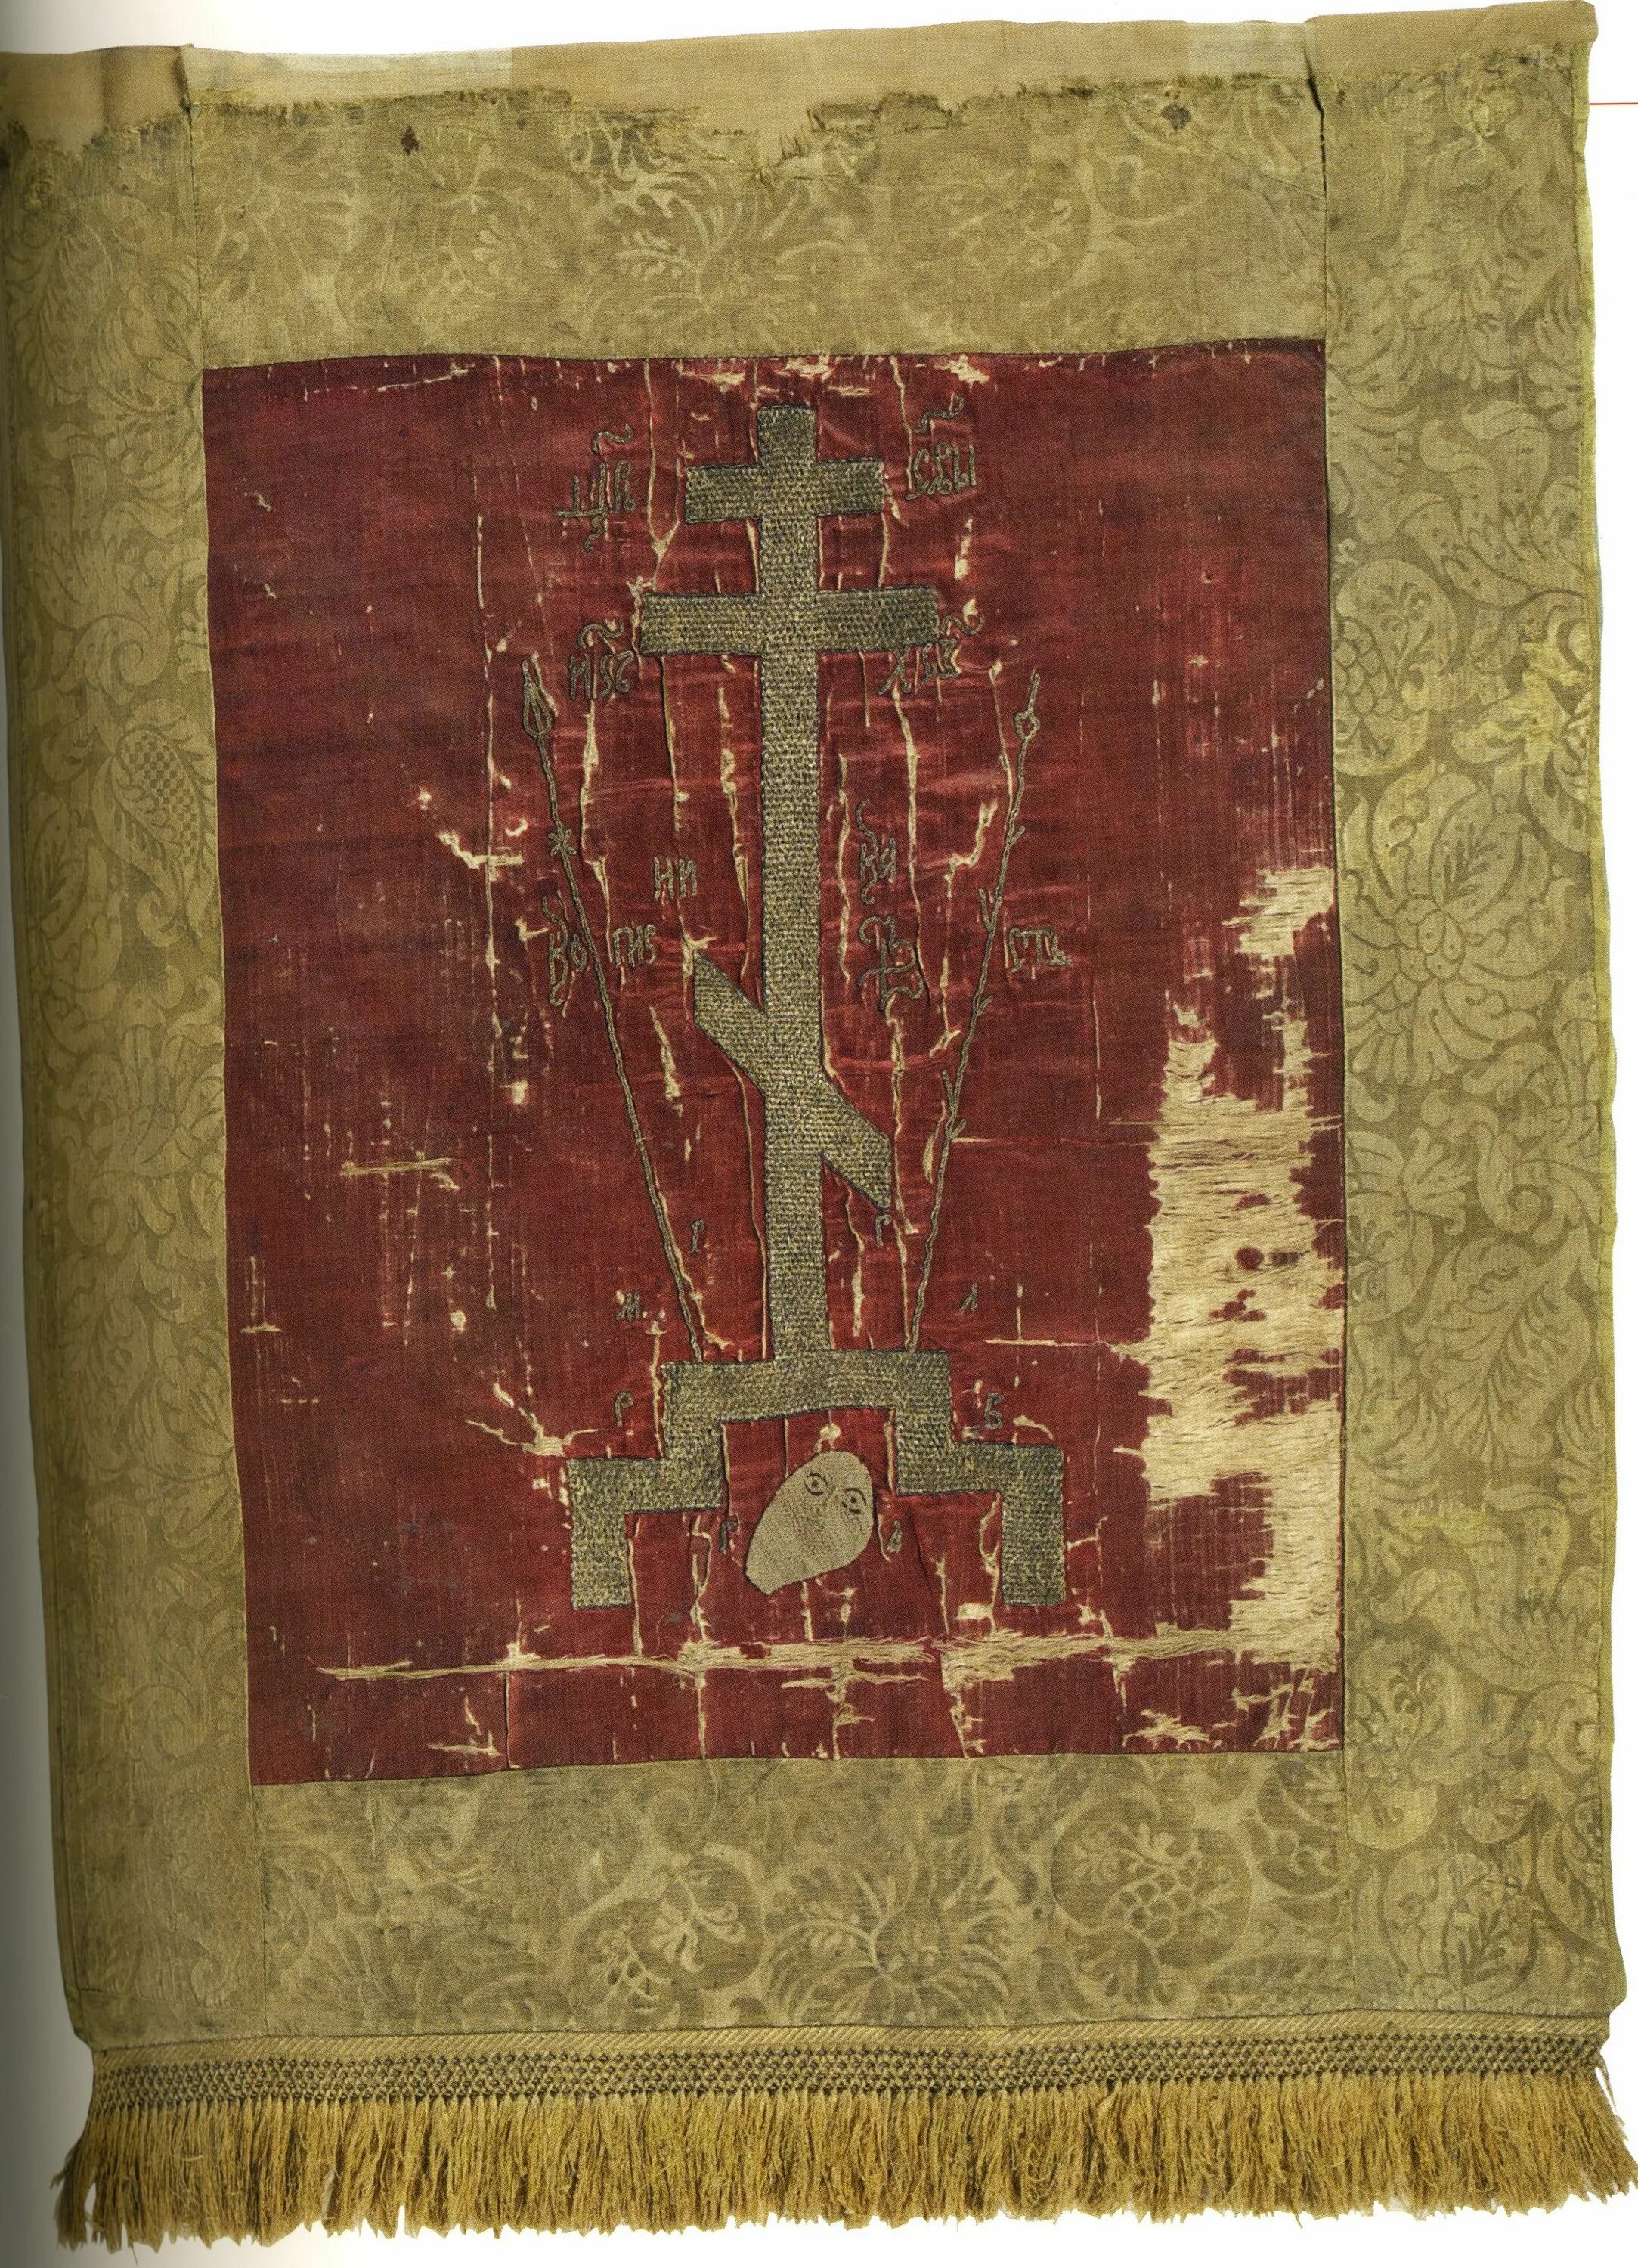 Пелена 8 букв. Пелена Голгофский крест. Голгофский крест 17 век. Голгофский крест покровец. Древний Голгофский крест.